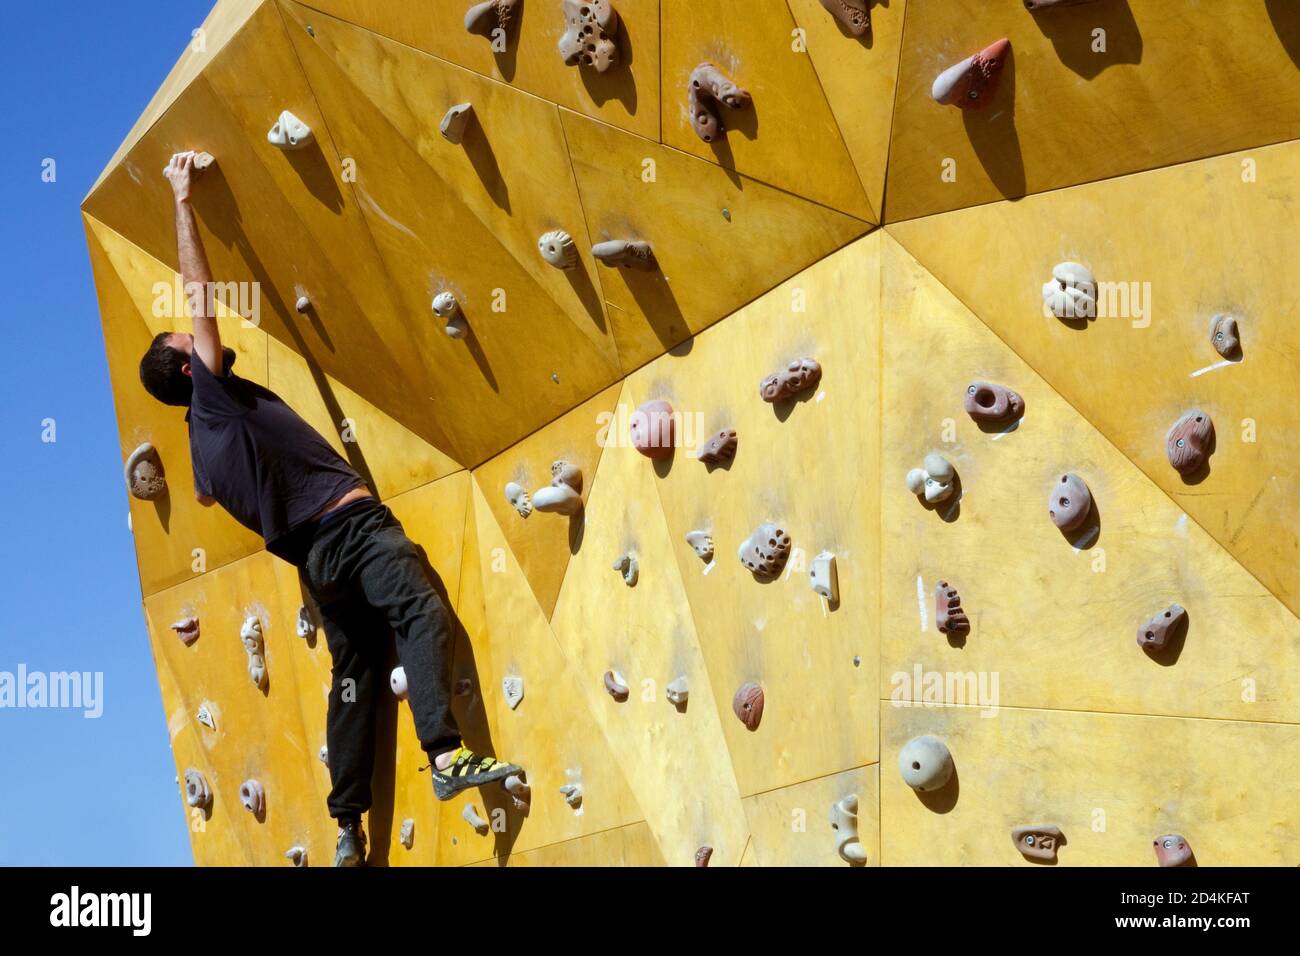 Man Climbing wall Central Park Valencia Ruzafa Spain lifestyle activities Stock Photo